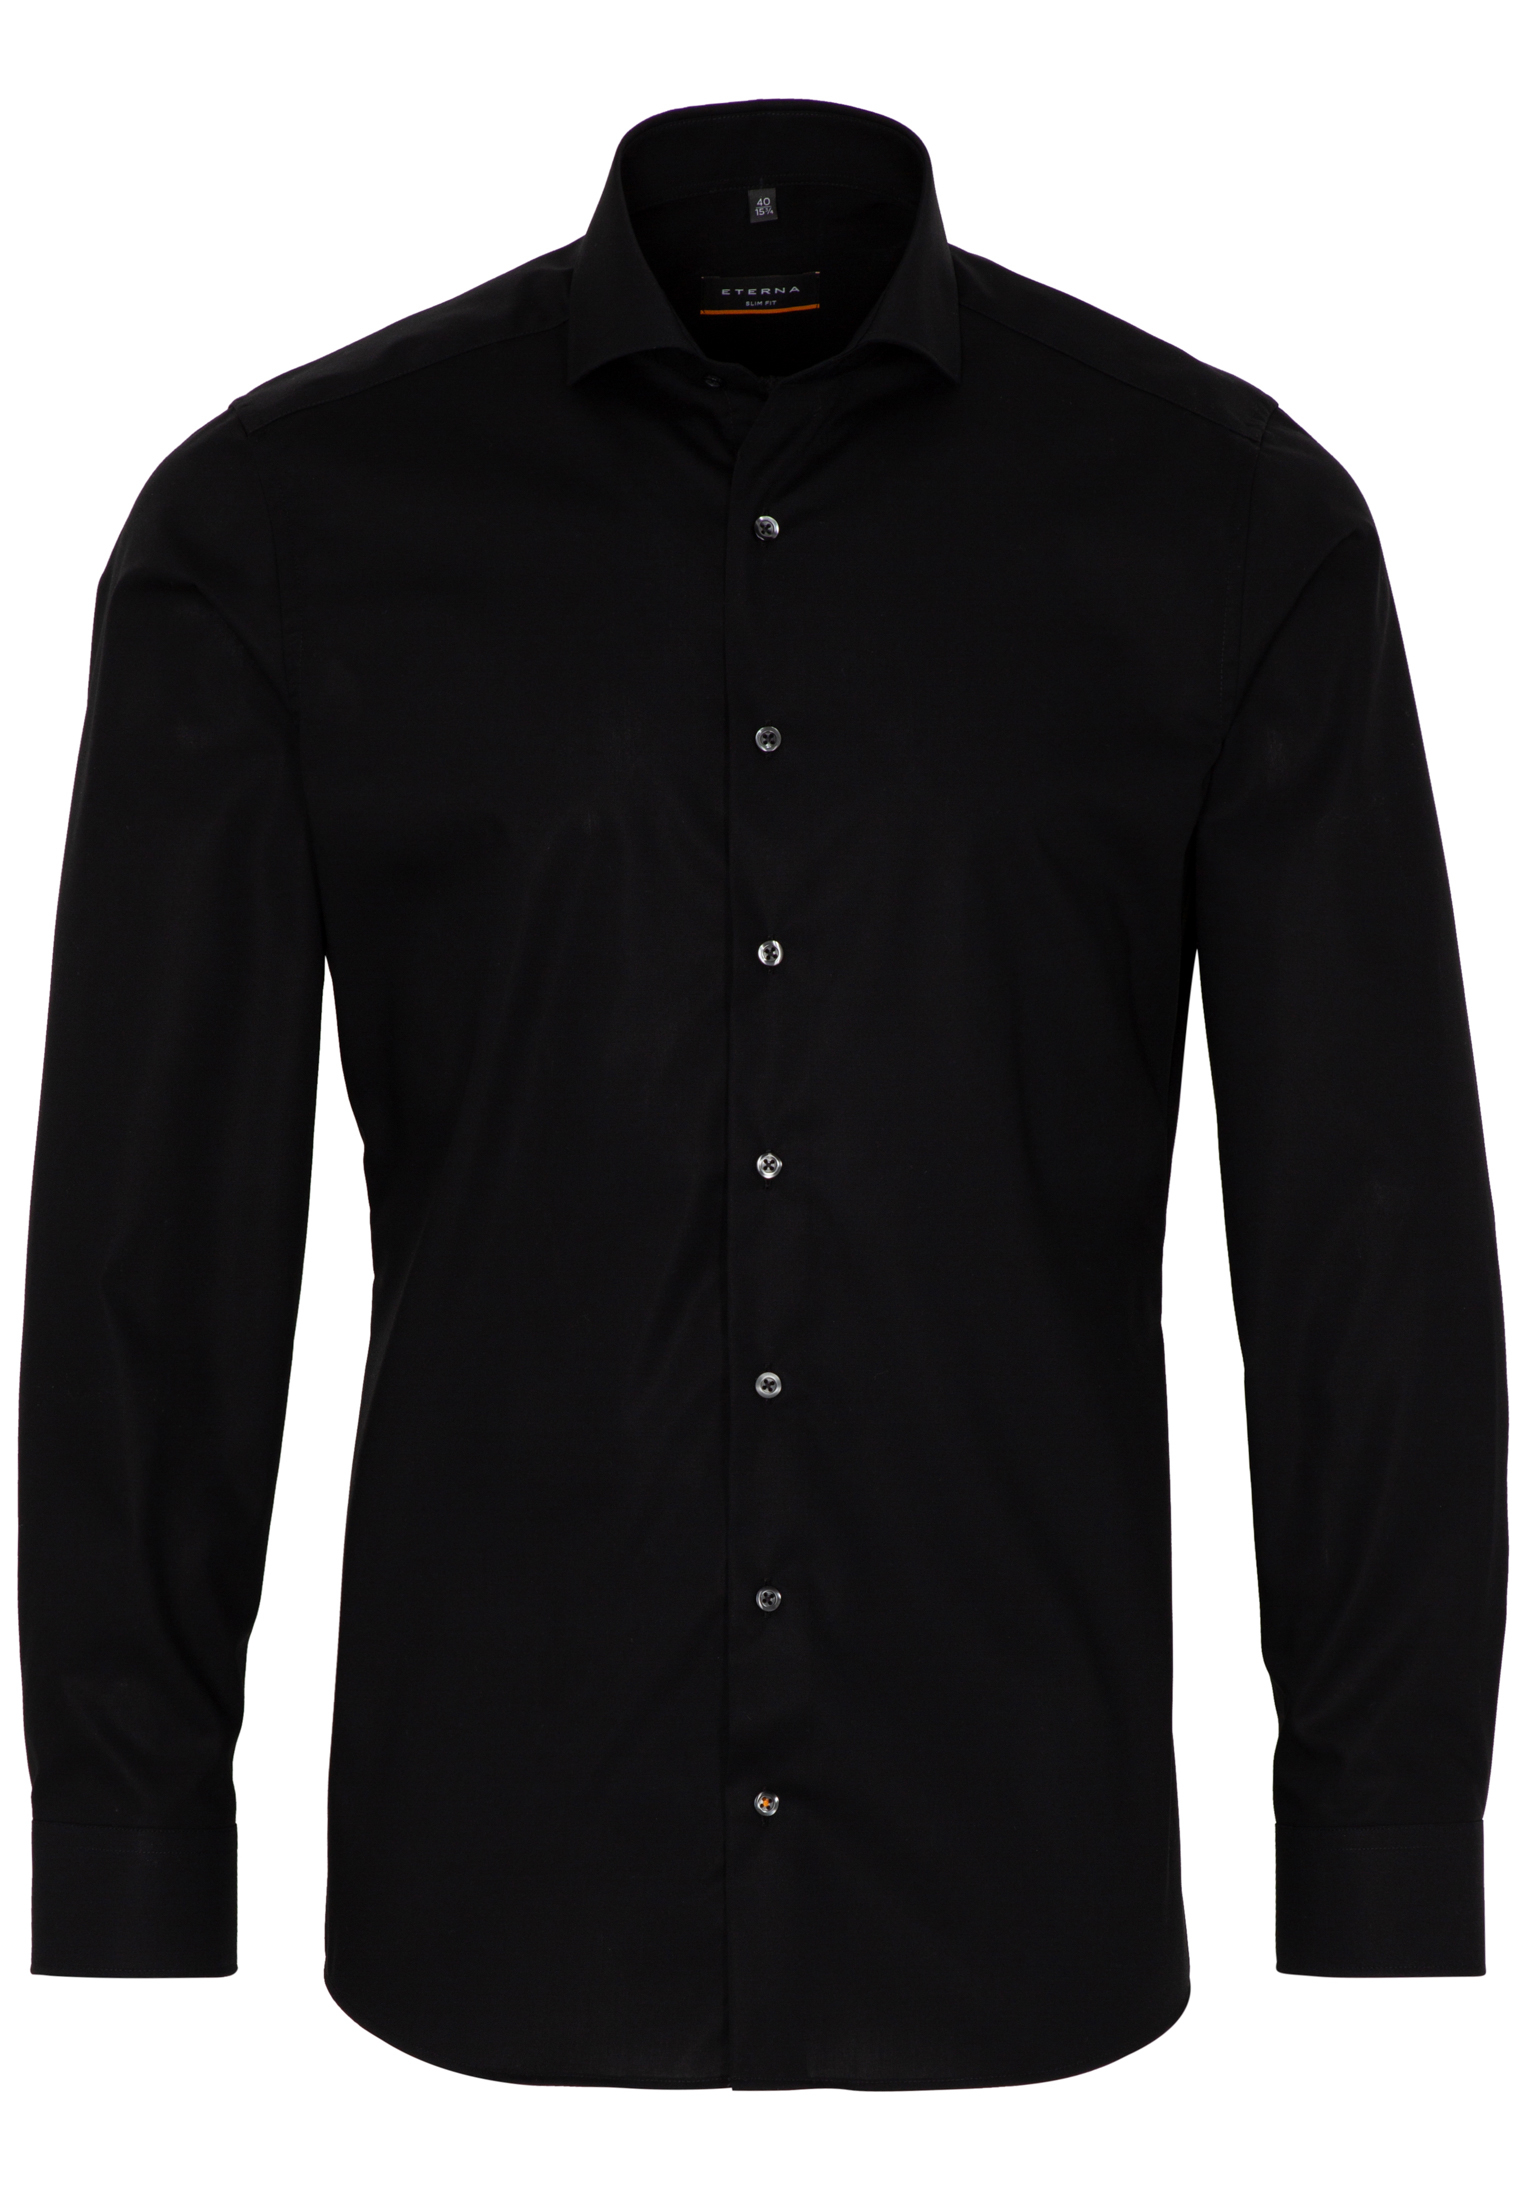 SLIM FIT Original Shirt in schwarz unifarben